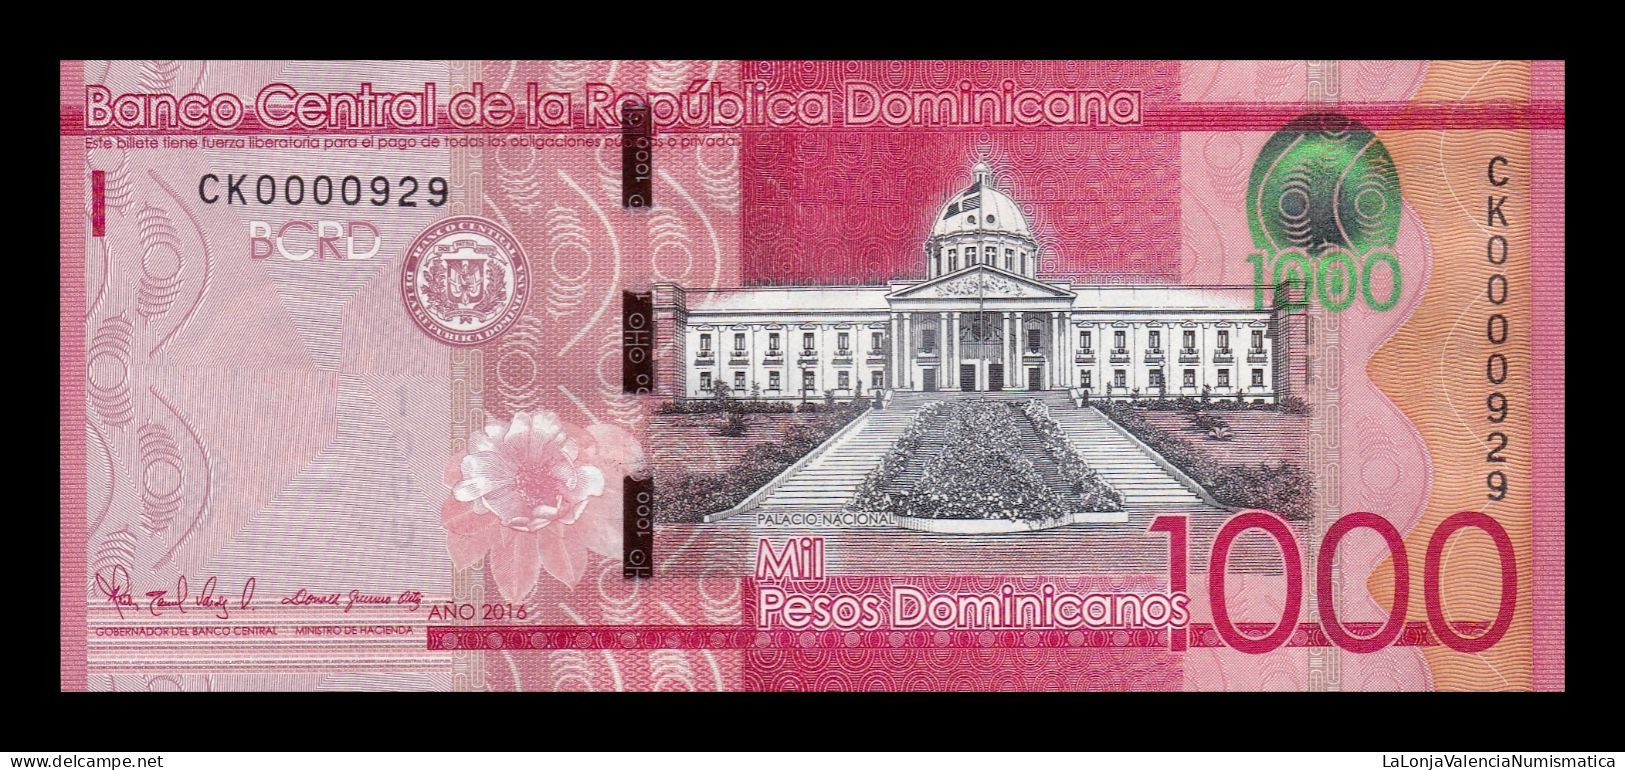 República Dominicana 1000 Pesos Dominicanos 2016 Pick 193c Low Serial 929 Sc Unc - Repubblica Dominicana